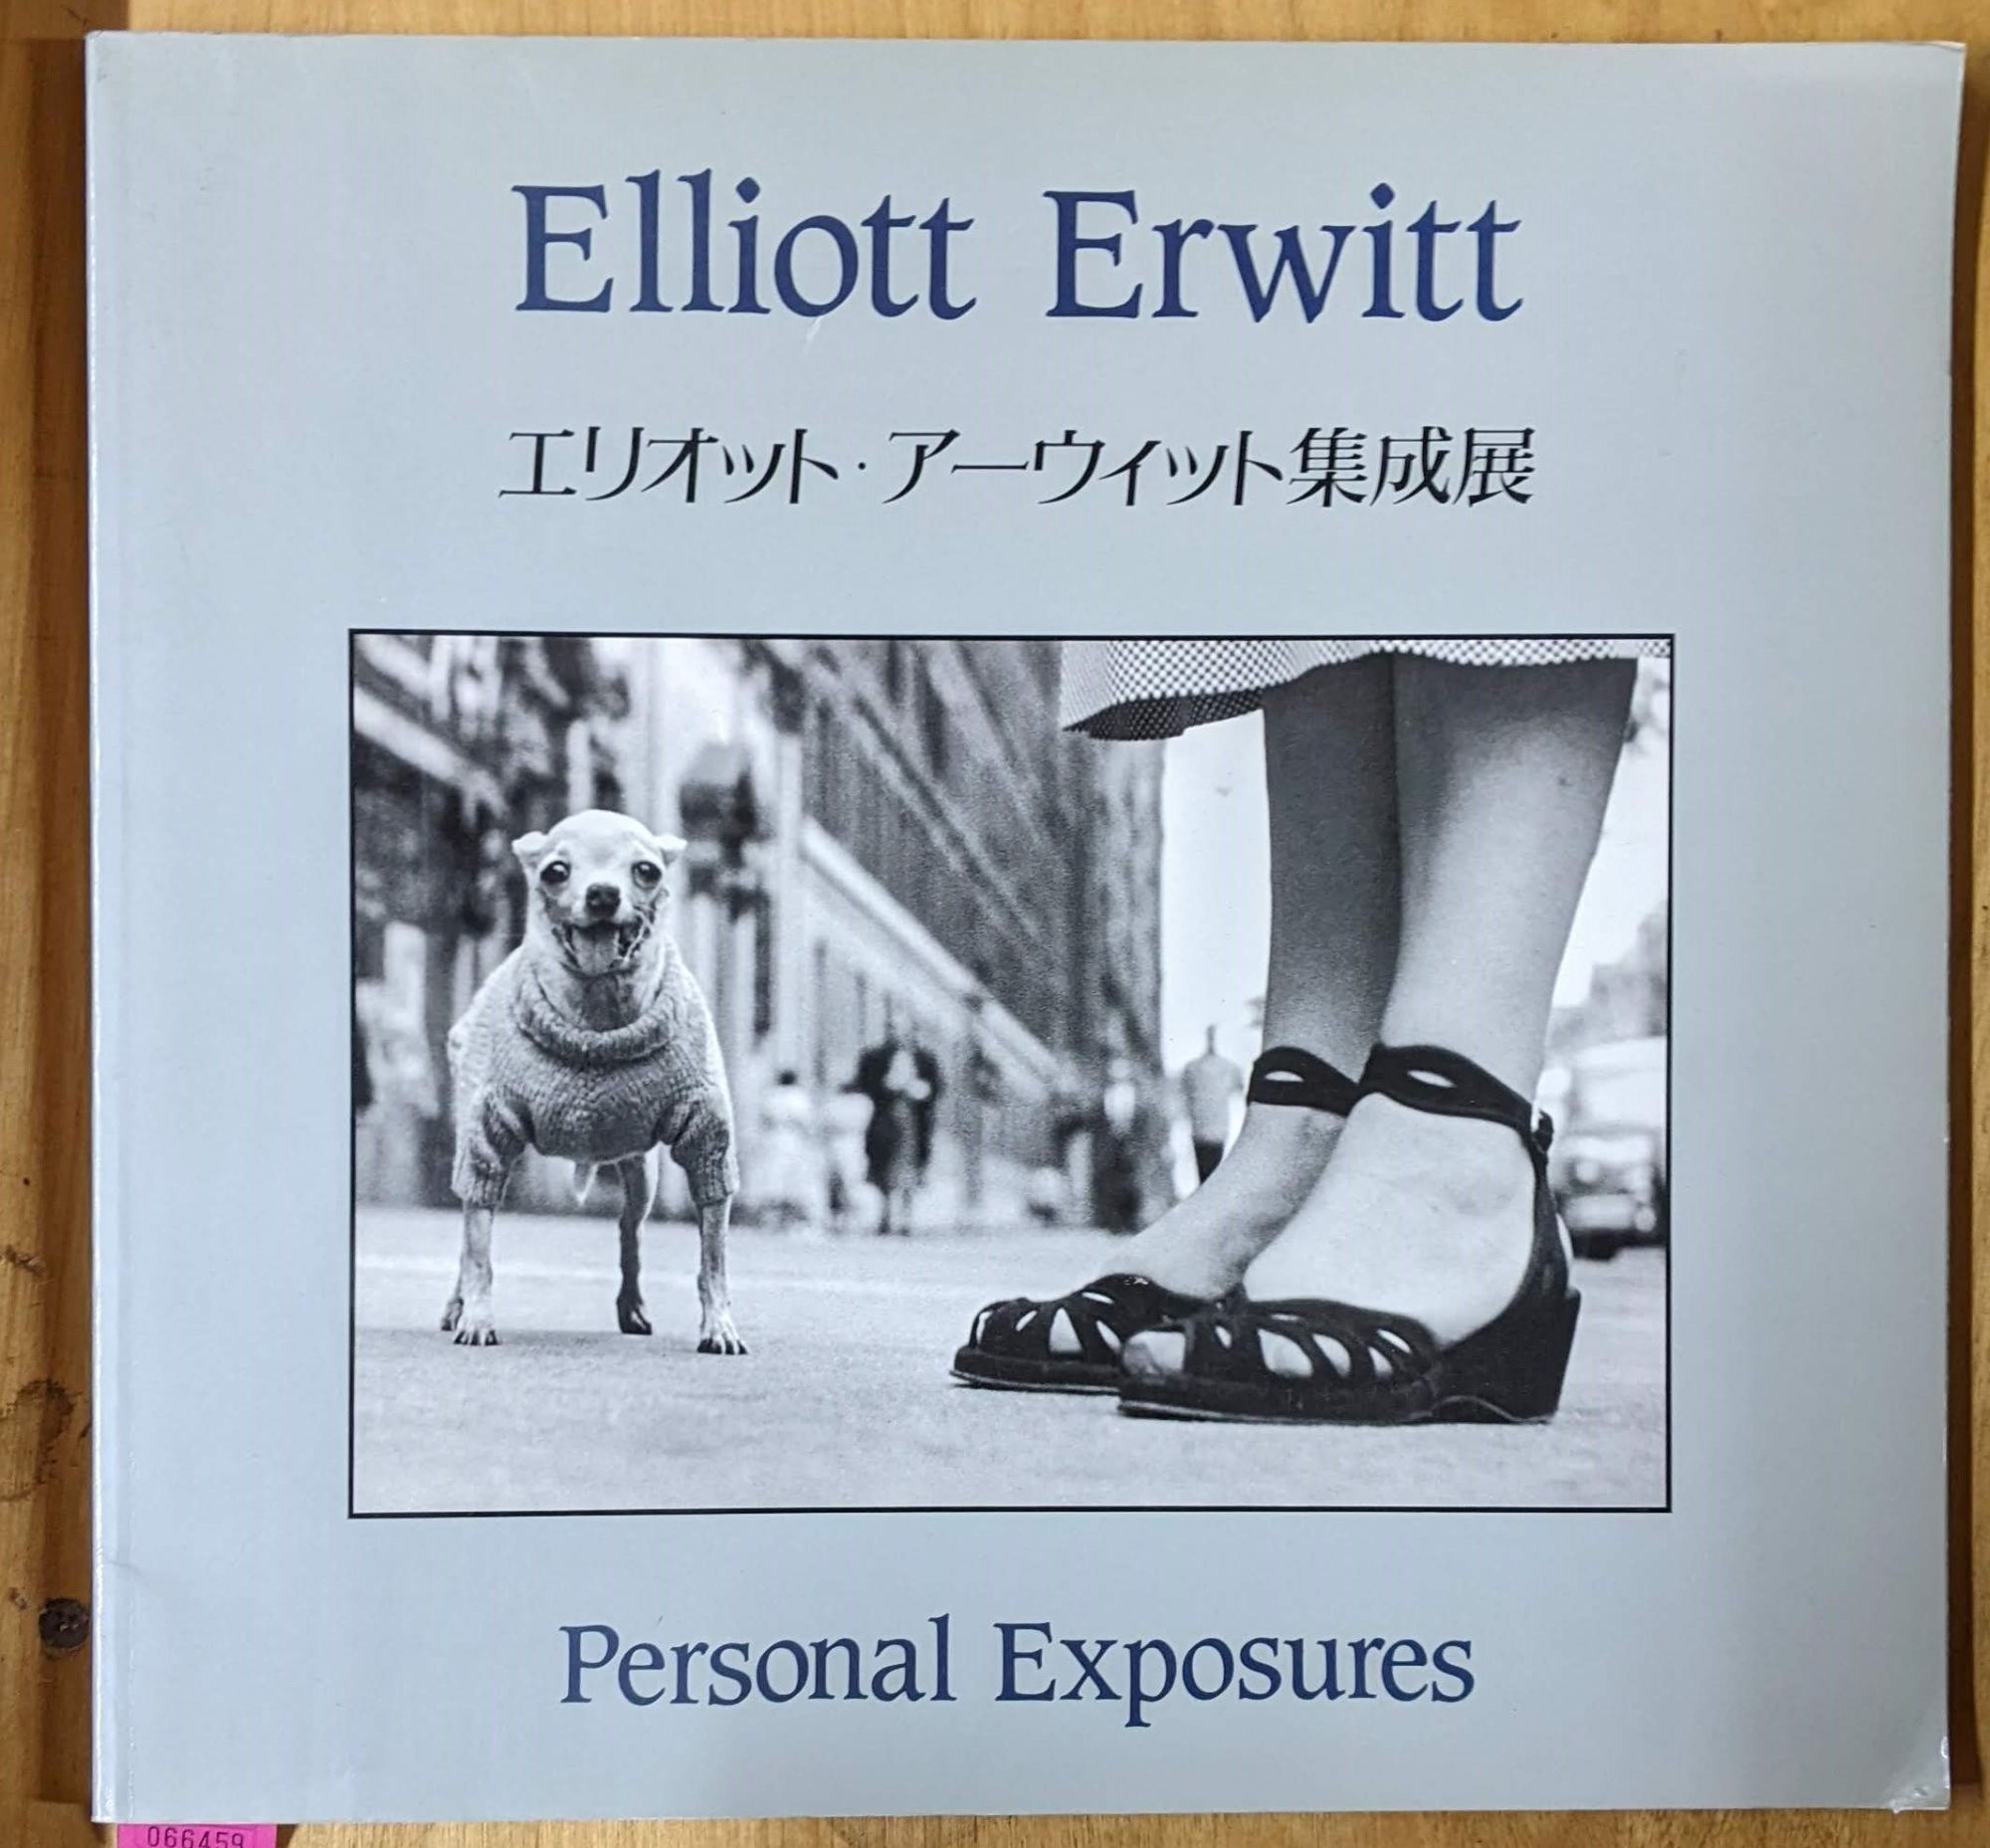 Personal Exposures - Elliott Erwitt